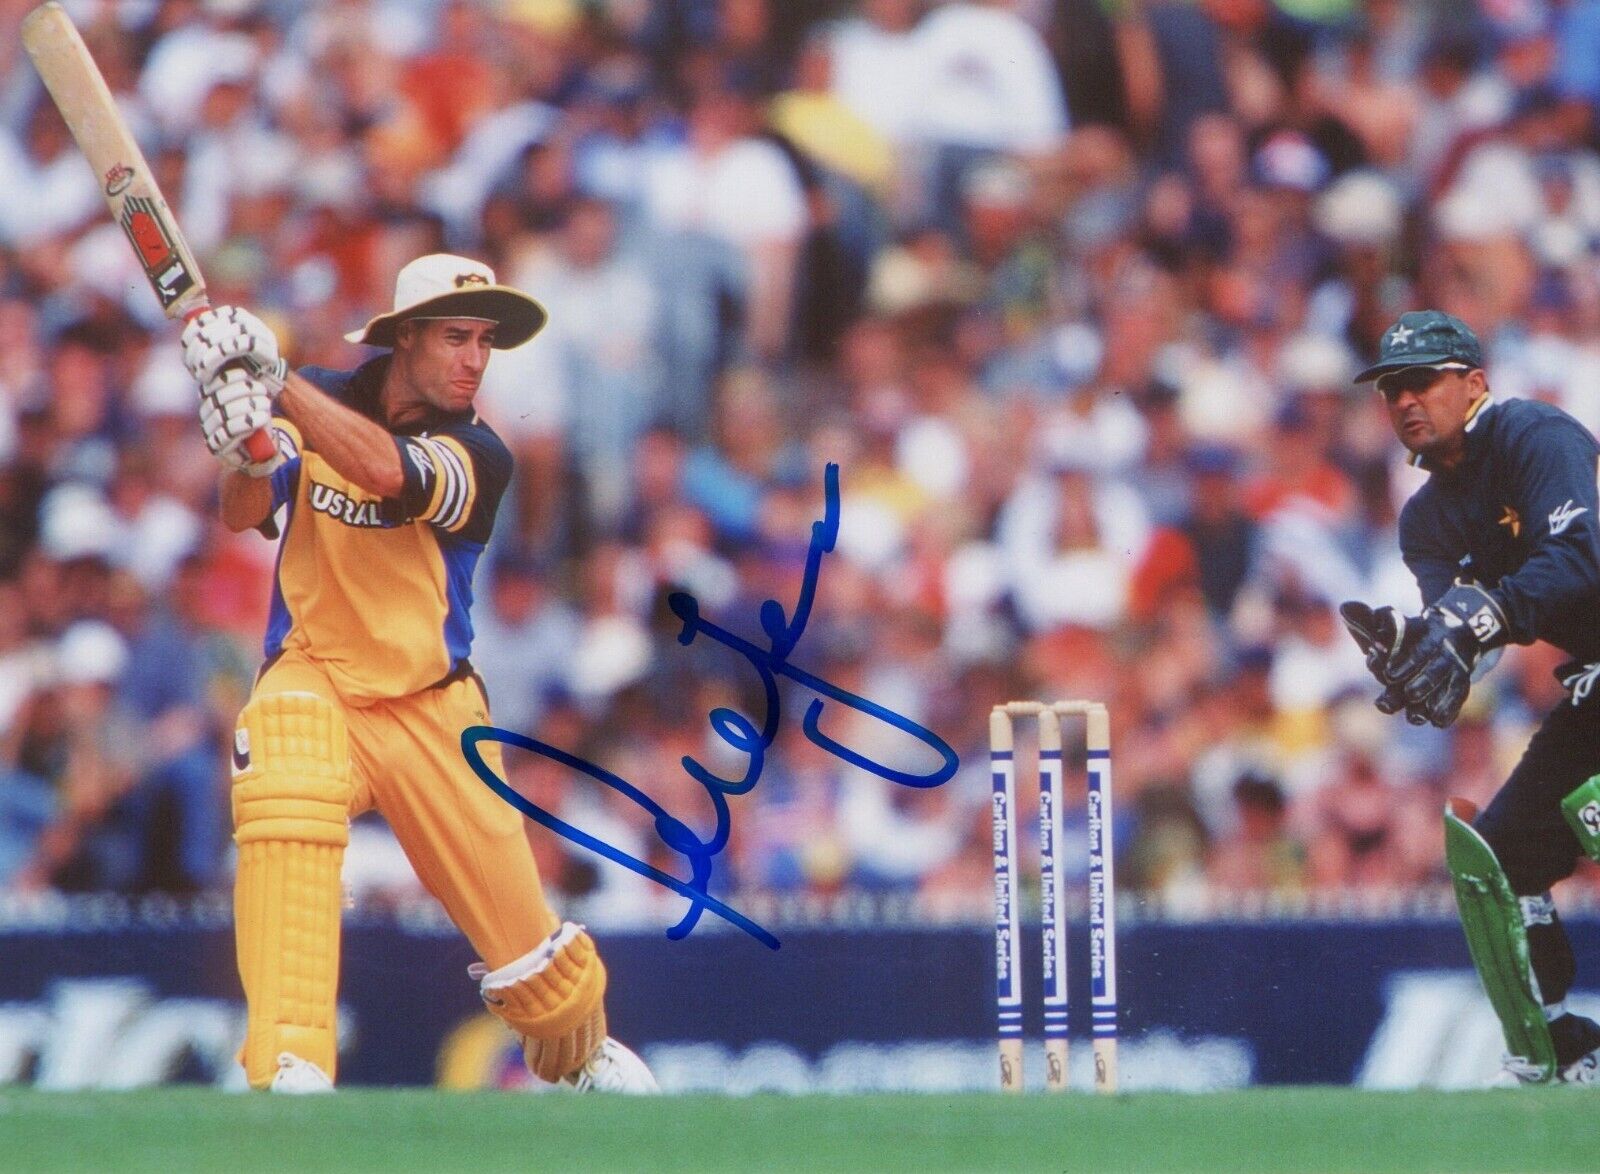 5x7 Original Autographed Photo of Australian Cricketer Michael Bevan